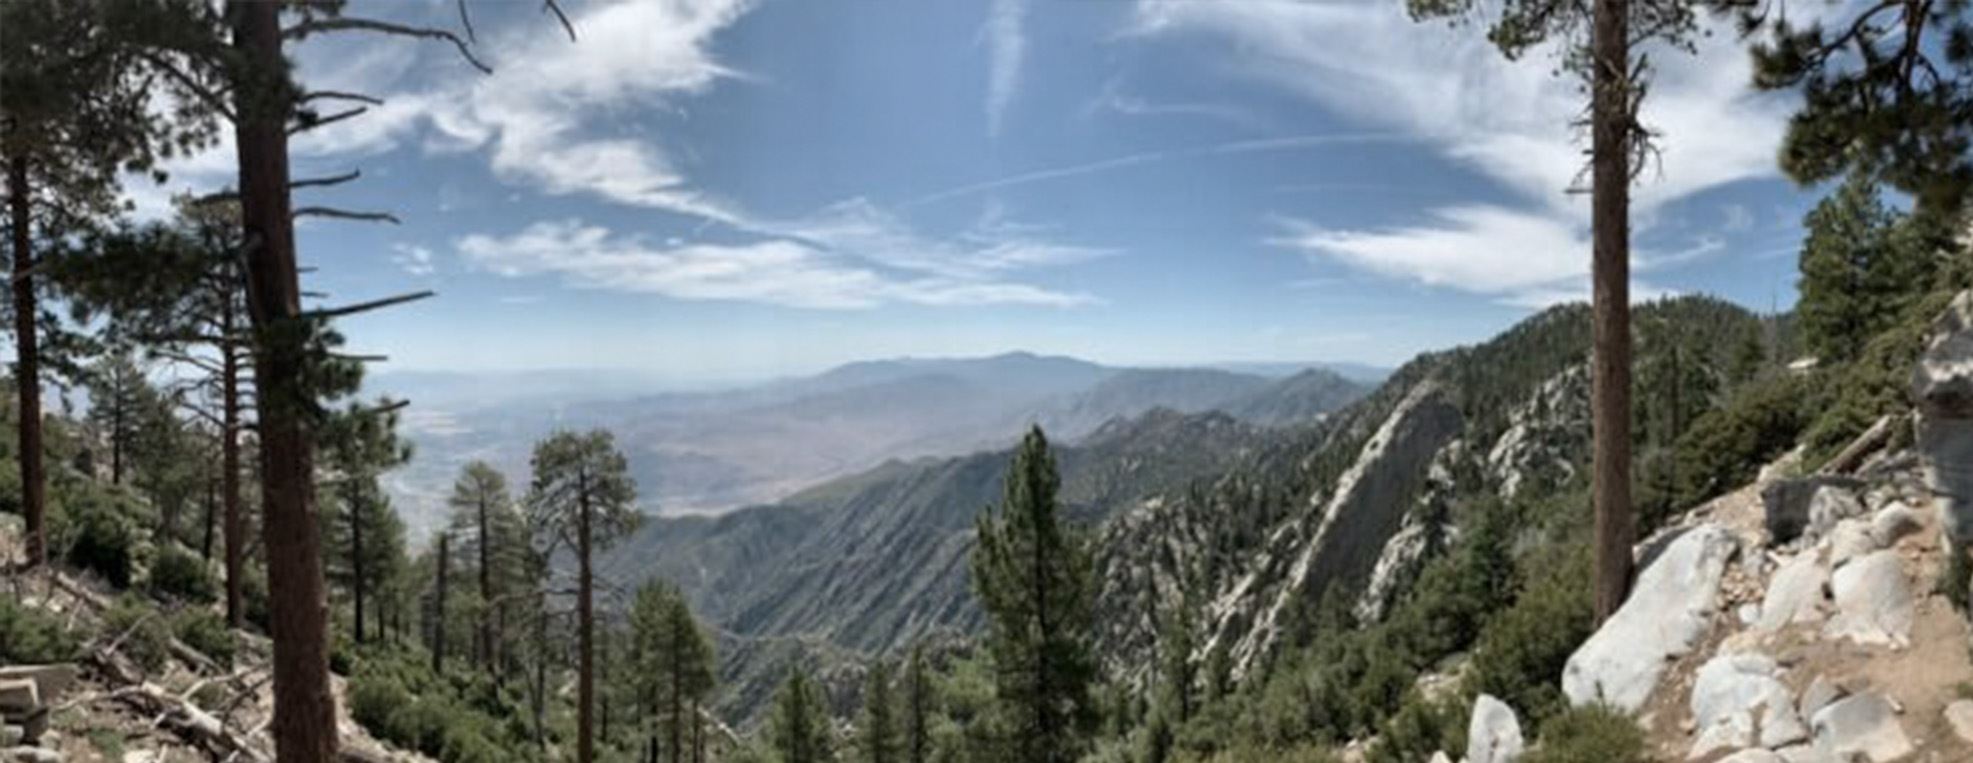 mountain range overlooking a canyon